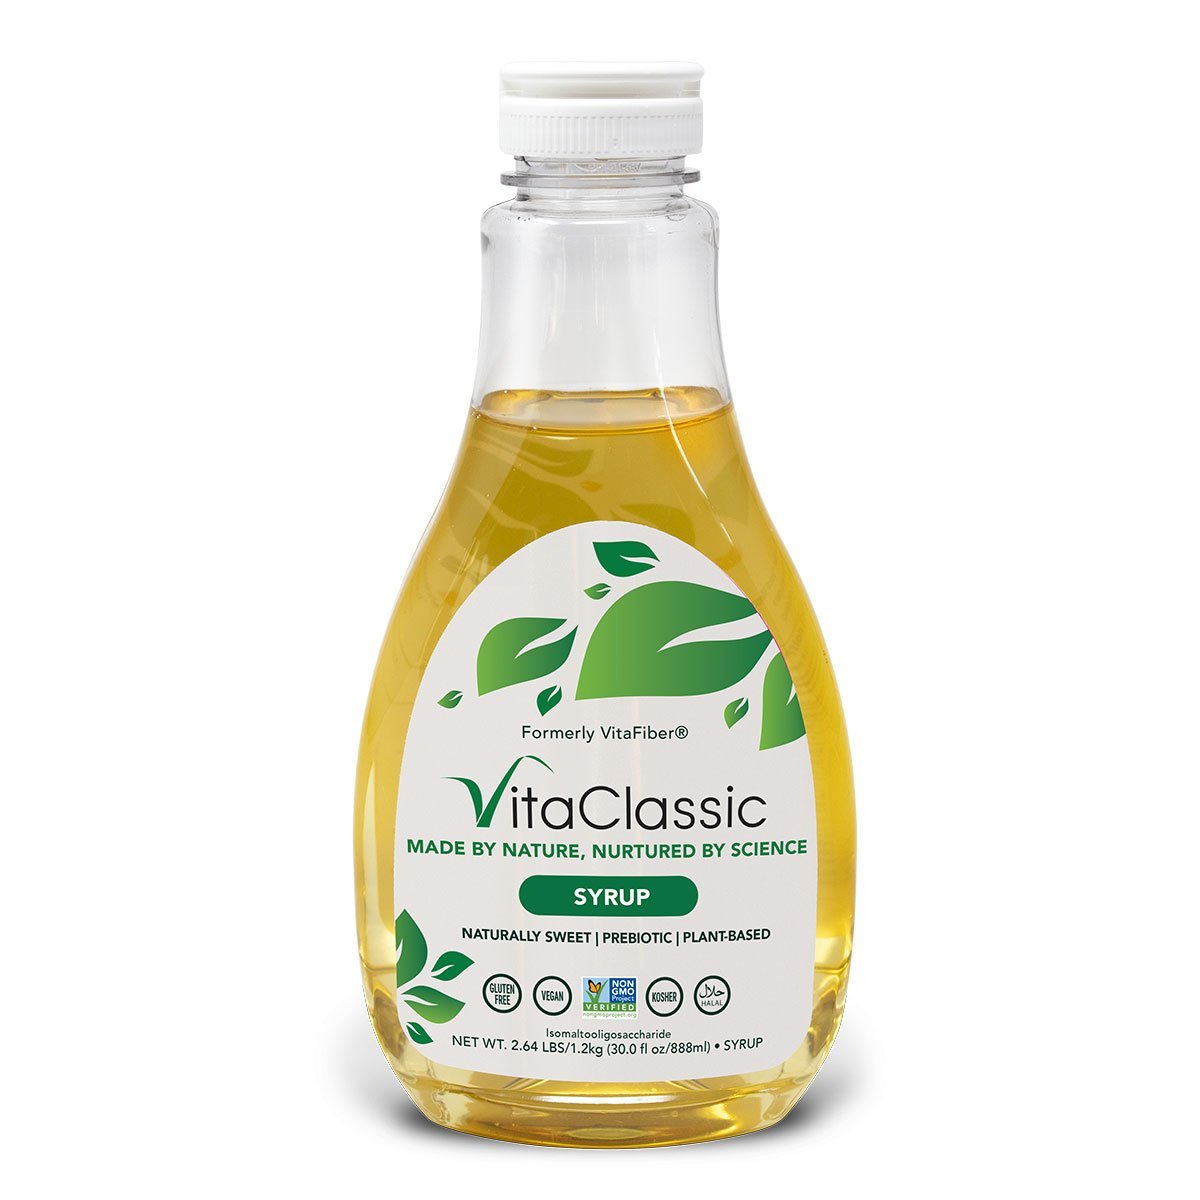 VitaClassic Syrup (Formerly VitaFiber® IMO)